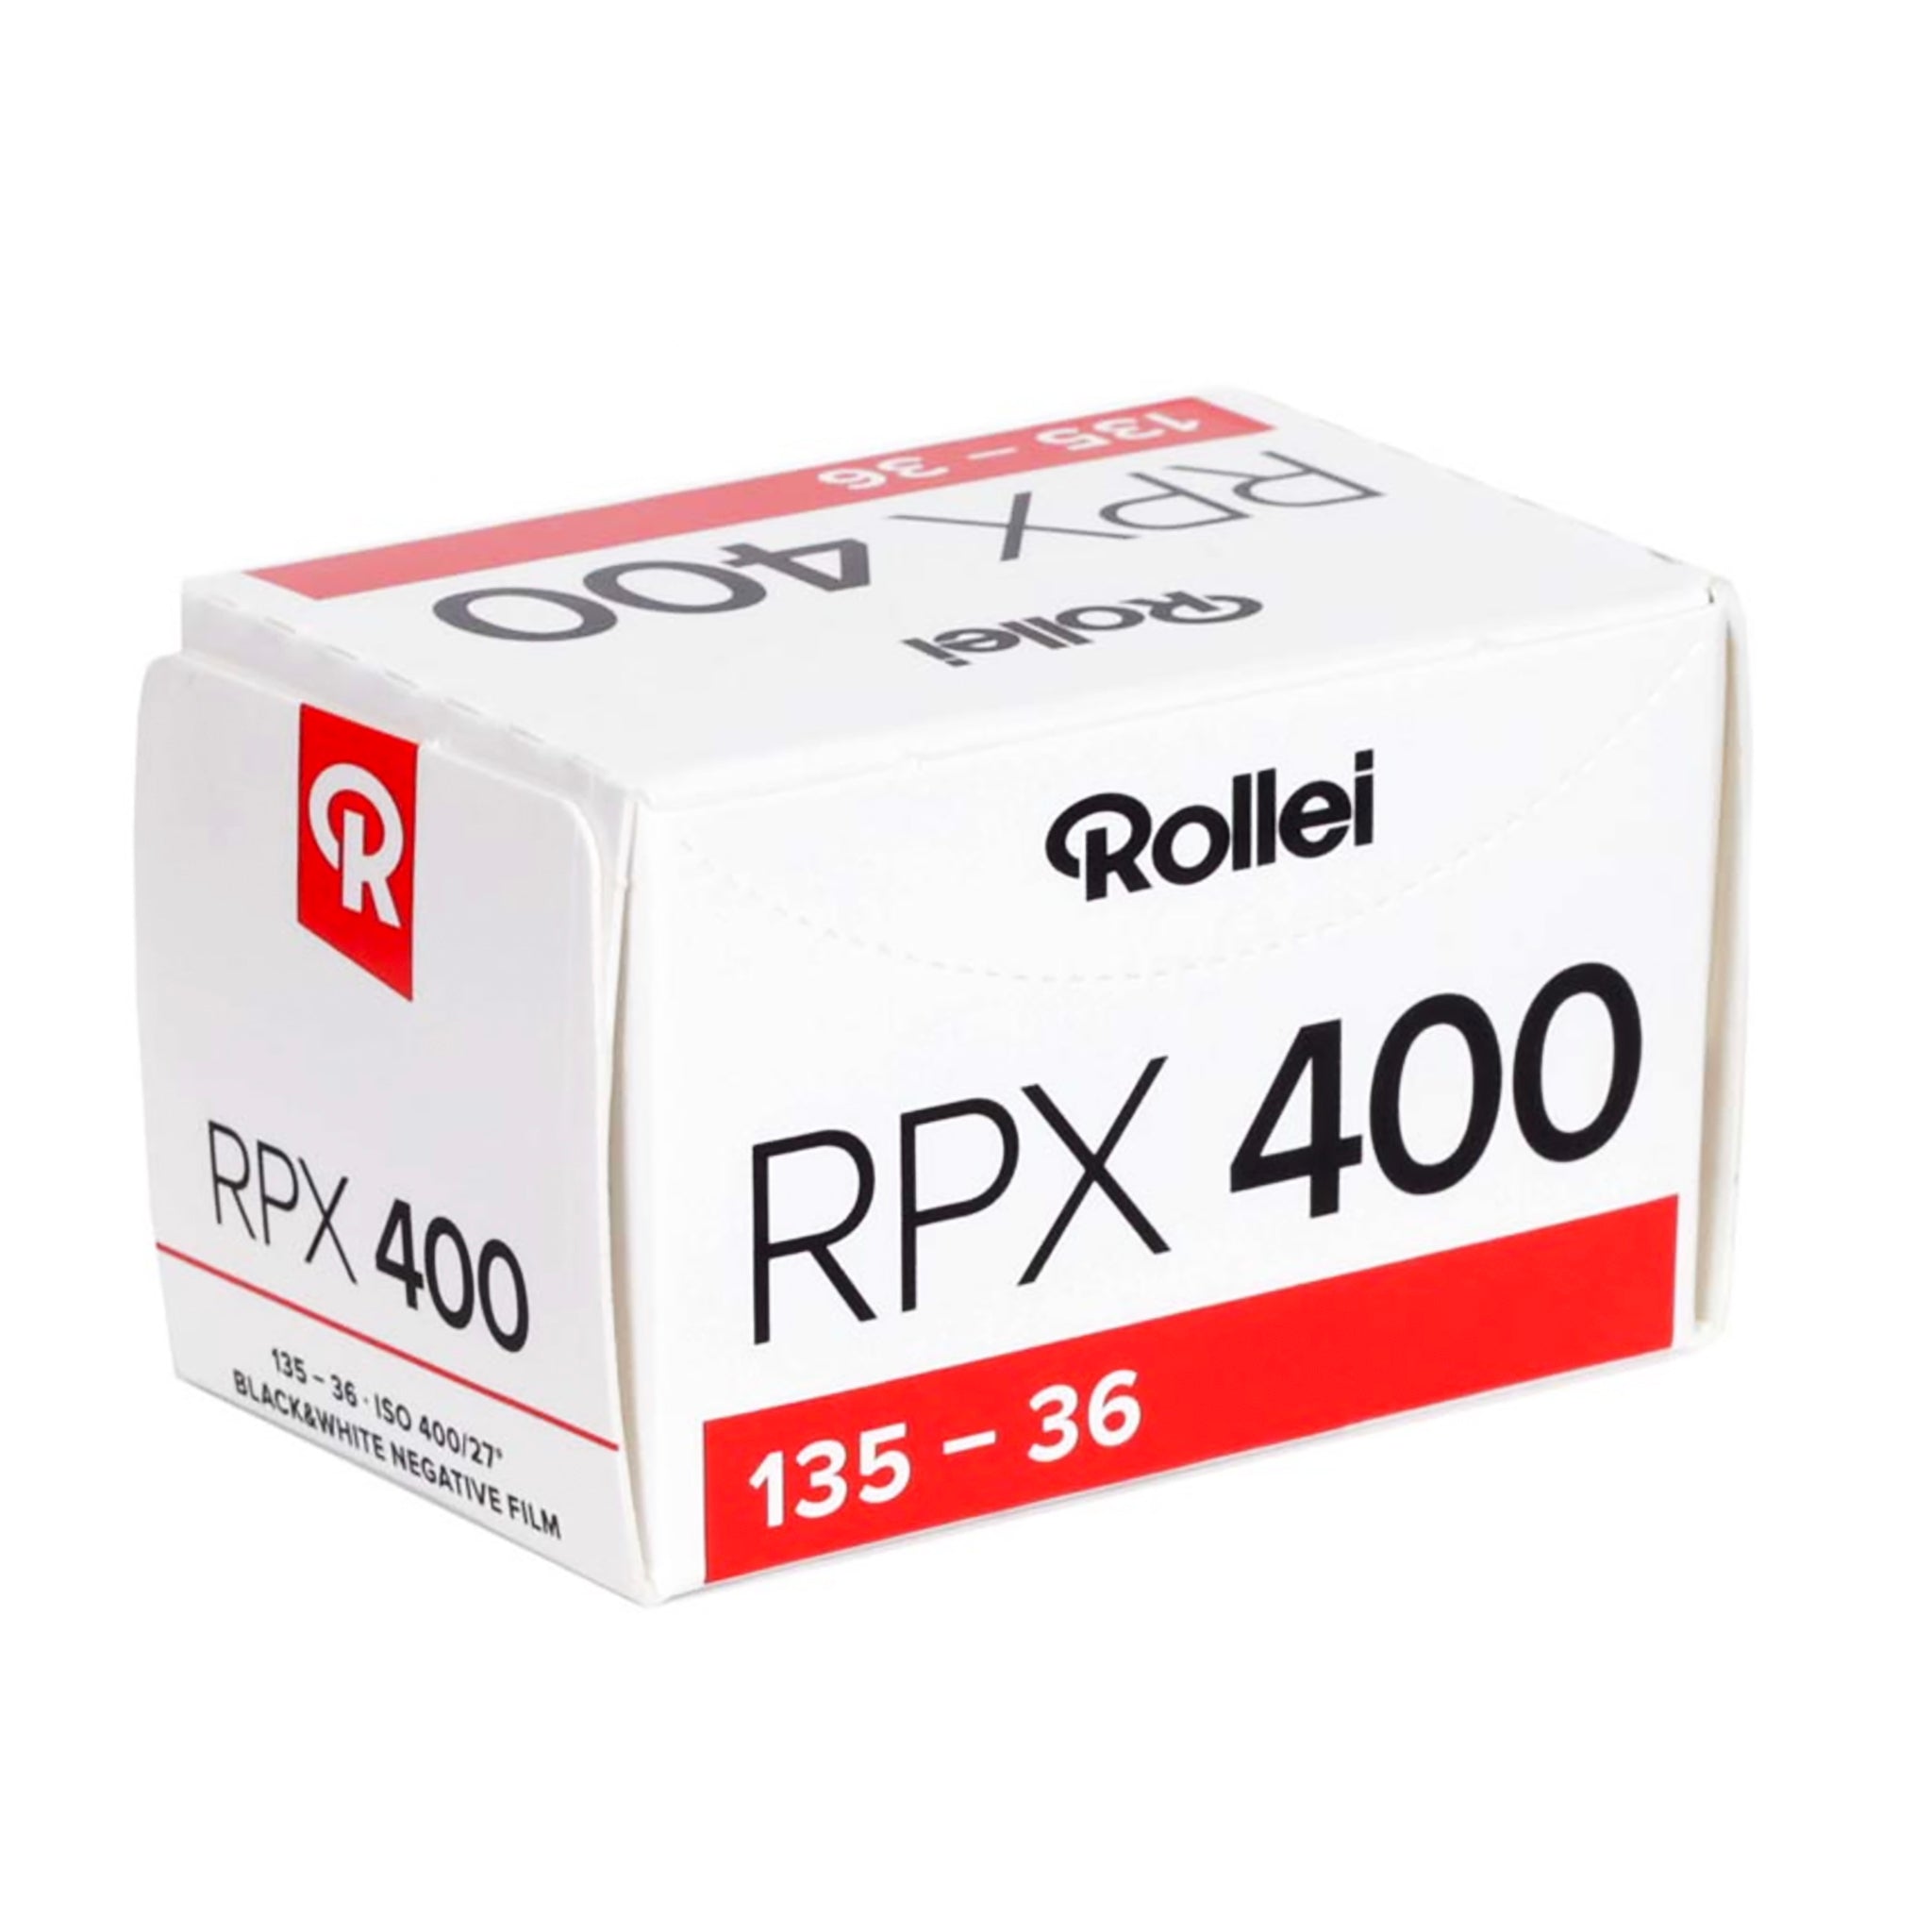 Rollei RPX 400 135-36